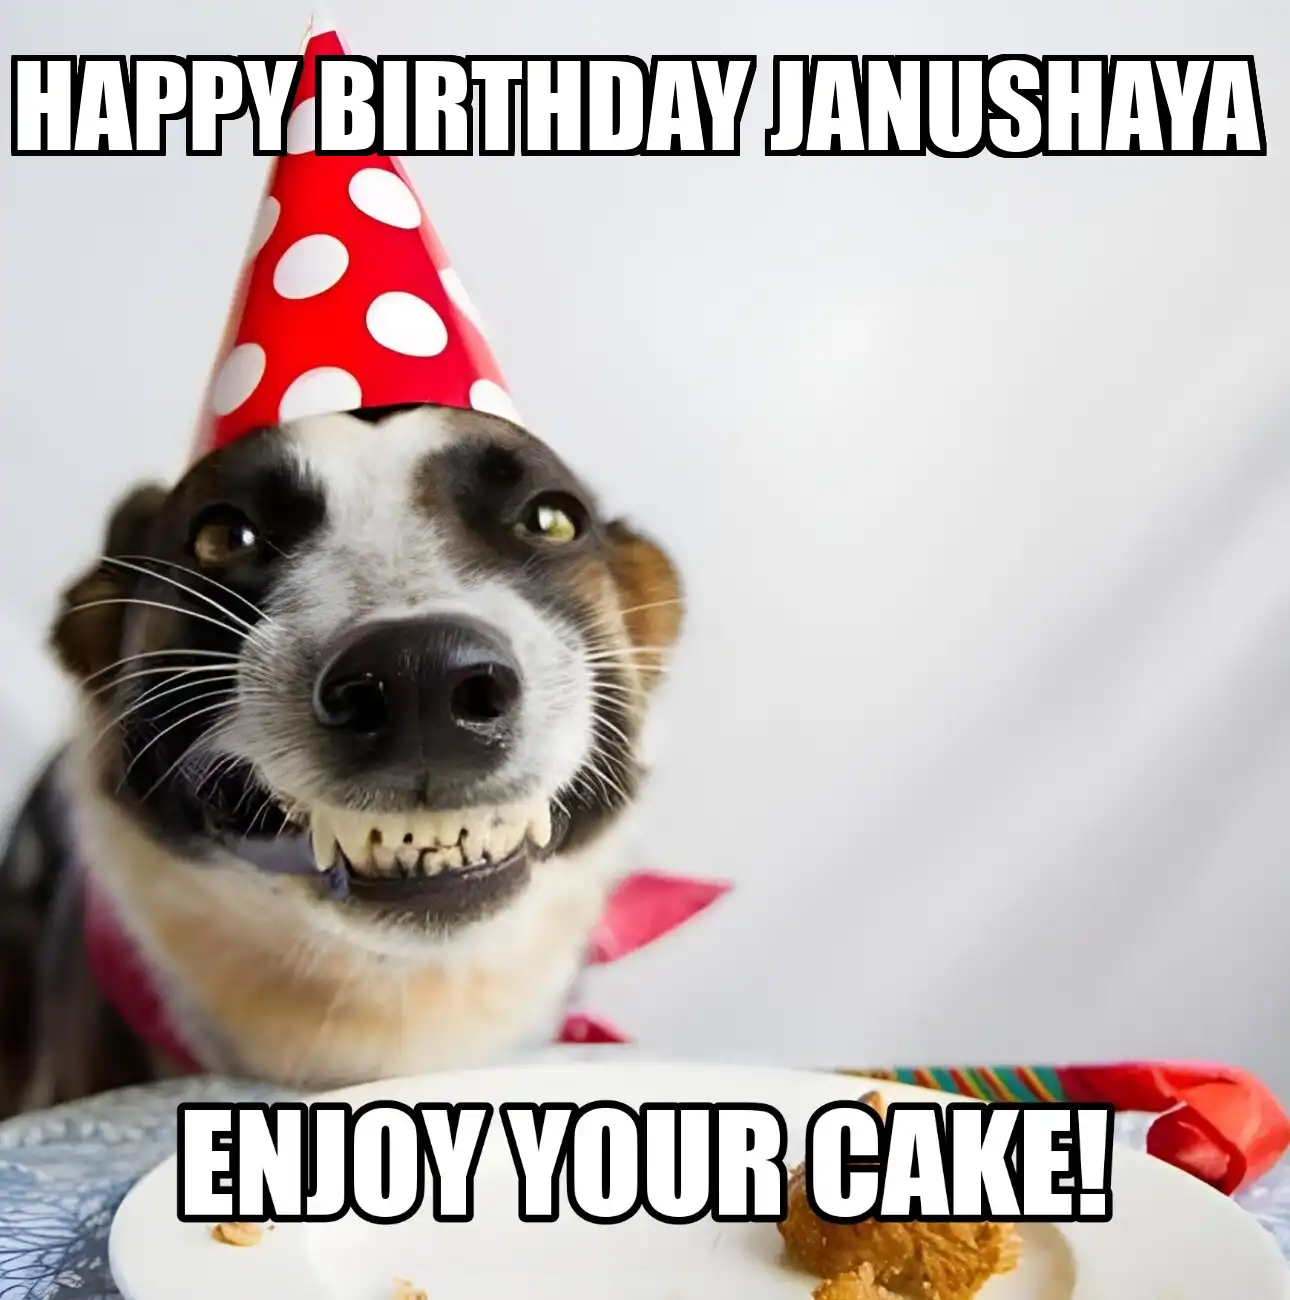 Happy Birthday Janushaya Enjoy Your Cake Dog Meme